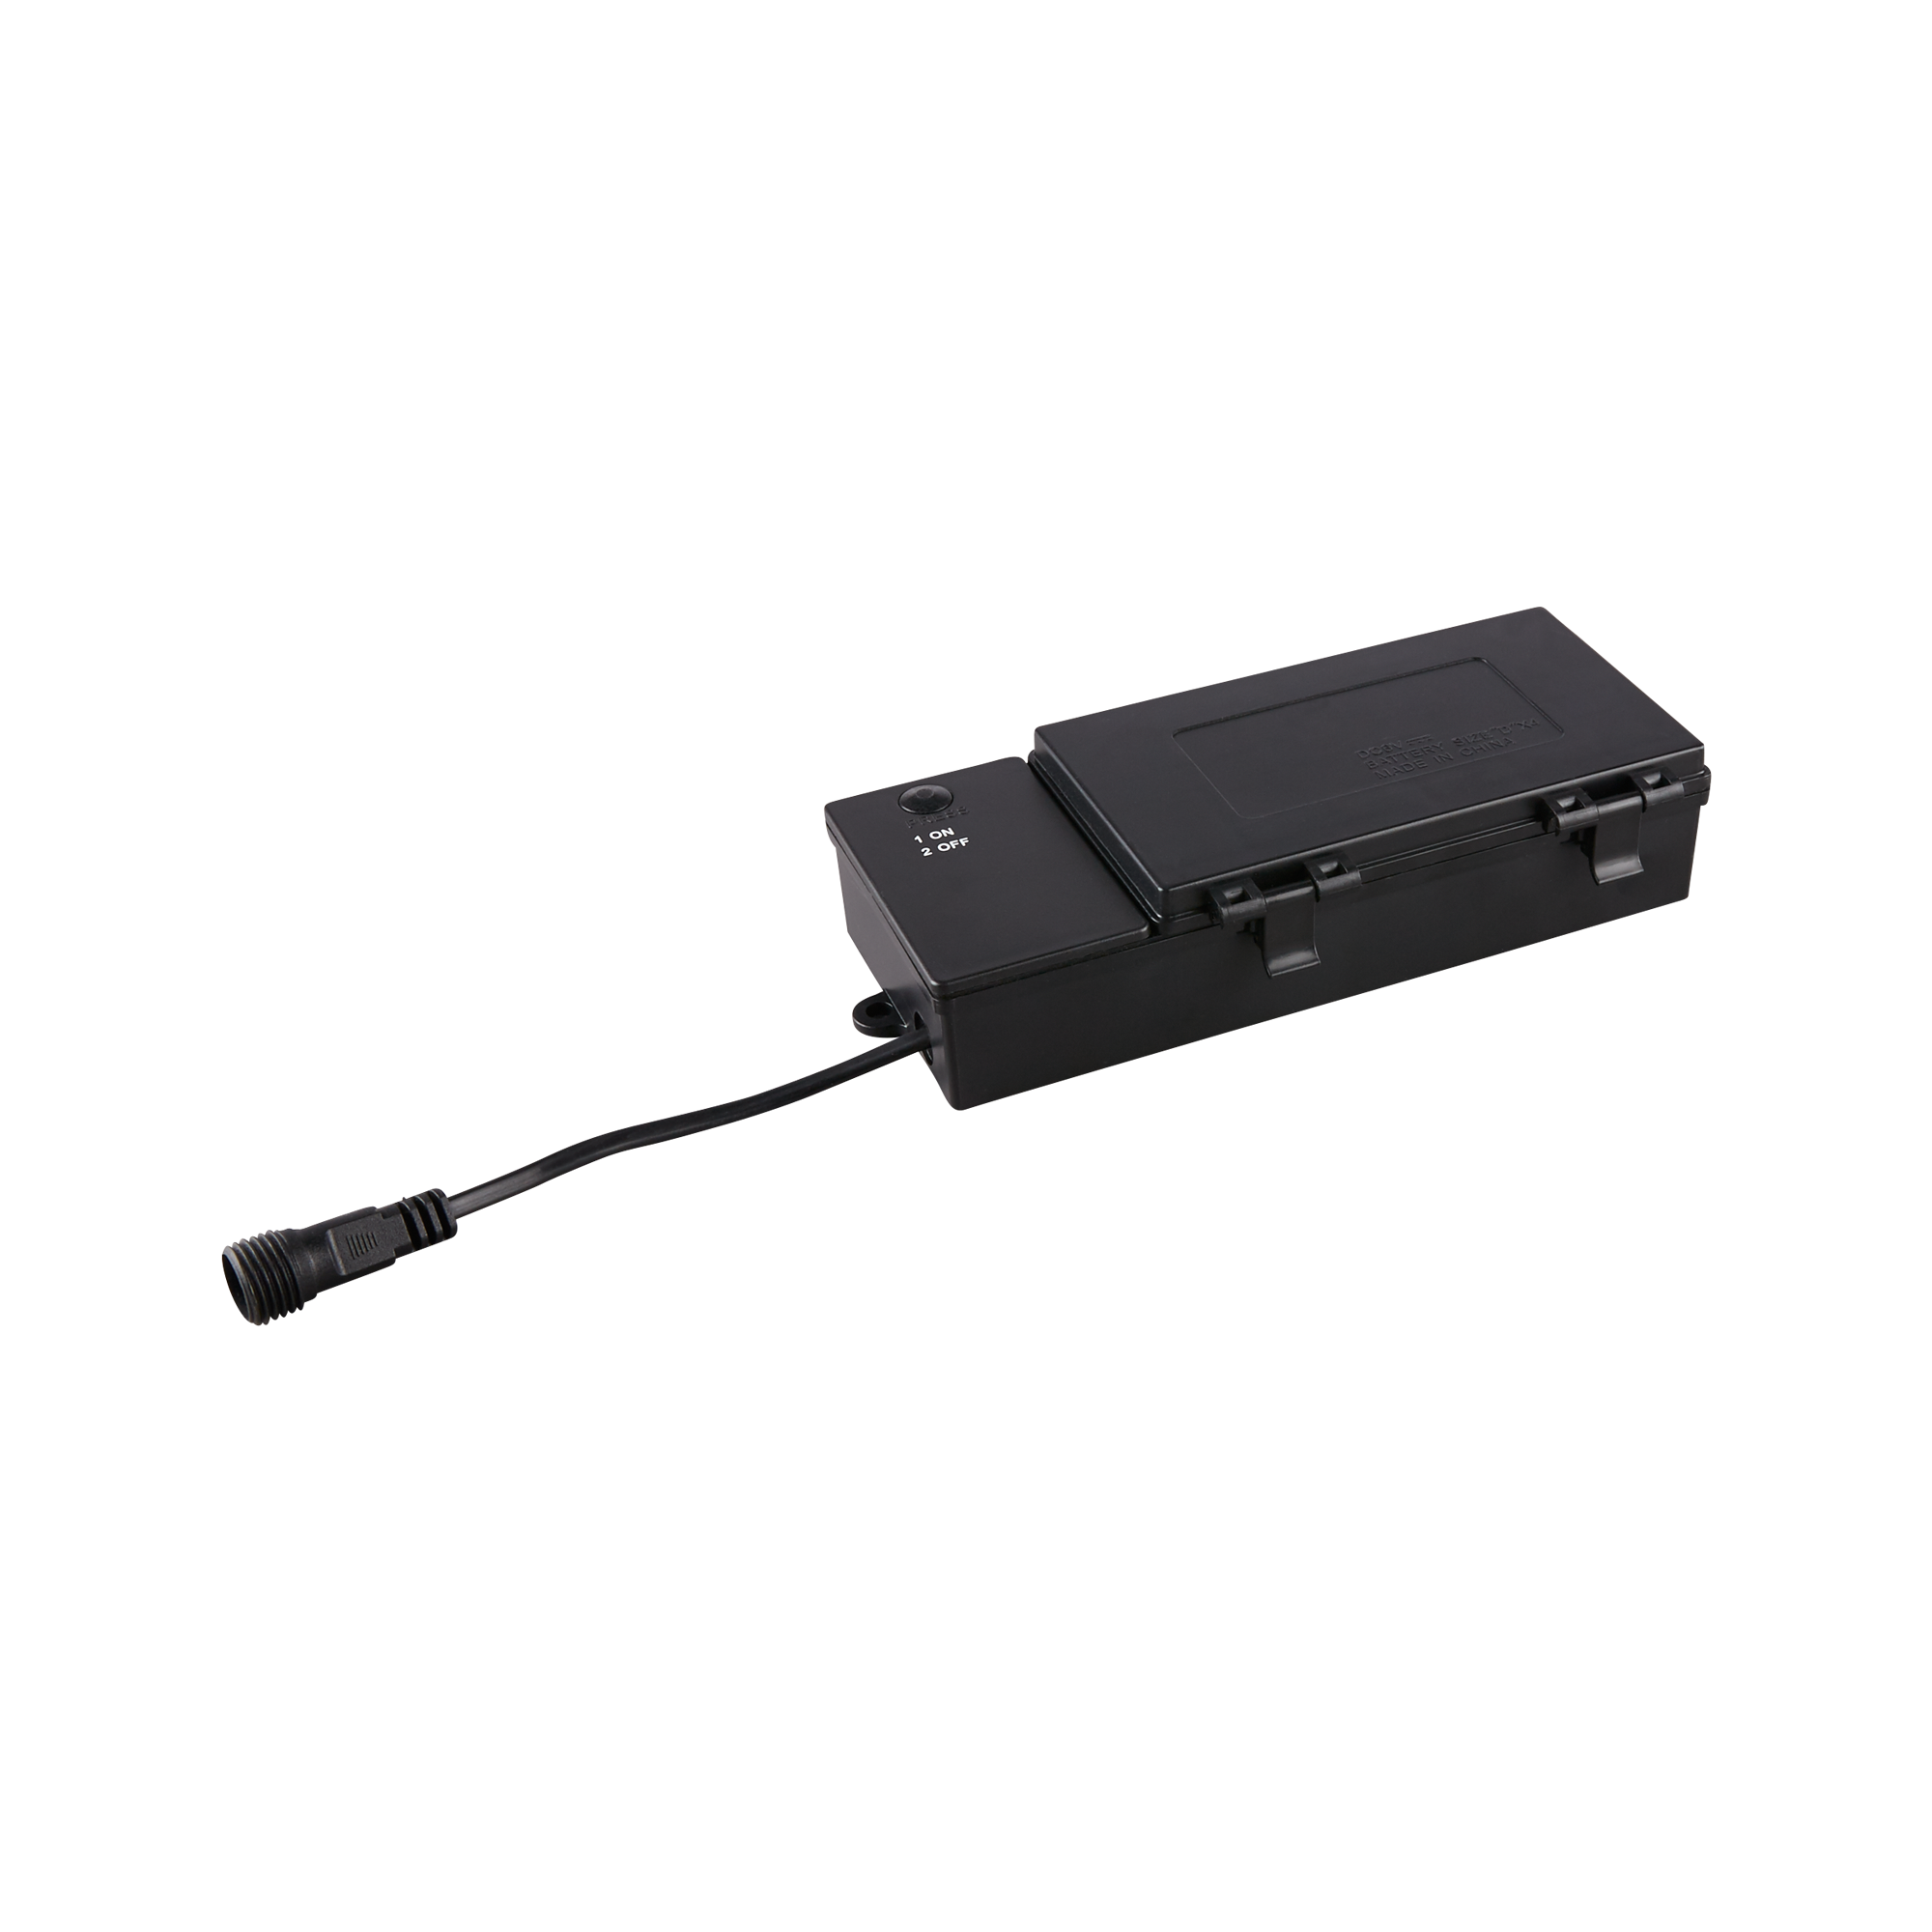 Batteriebox für toom-System 320 LEDs + product picture